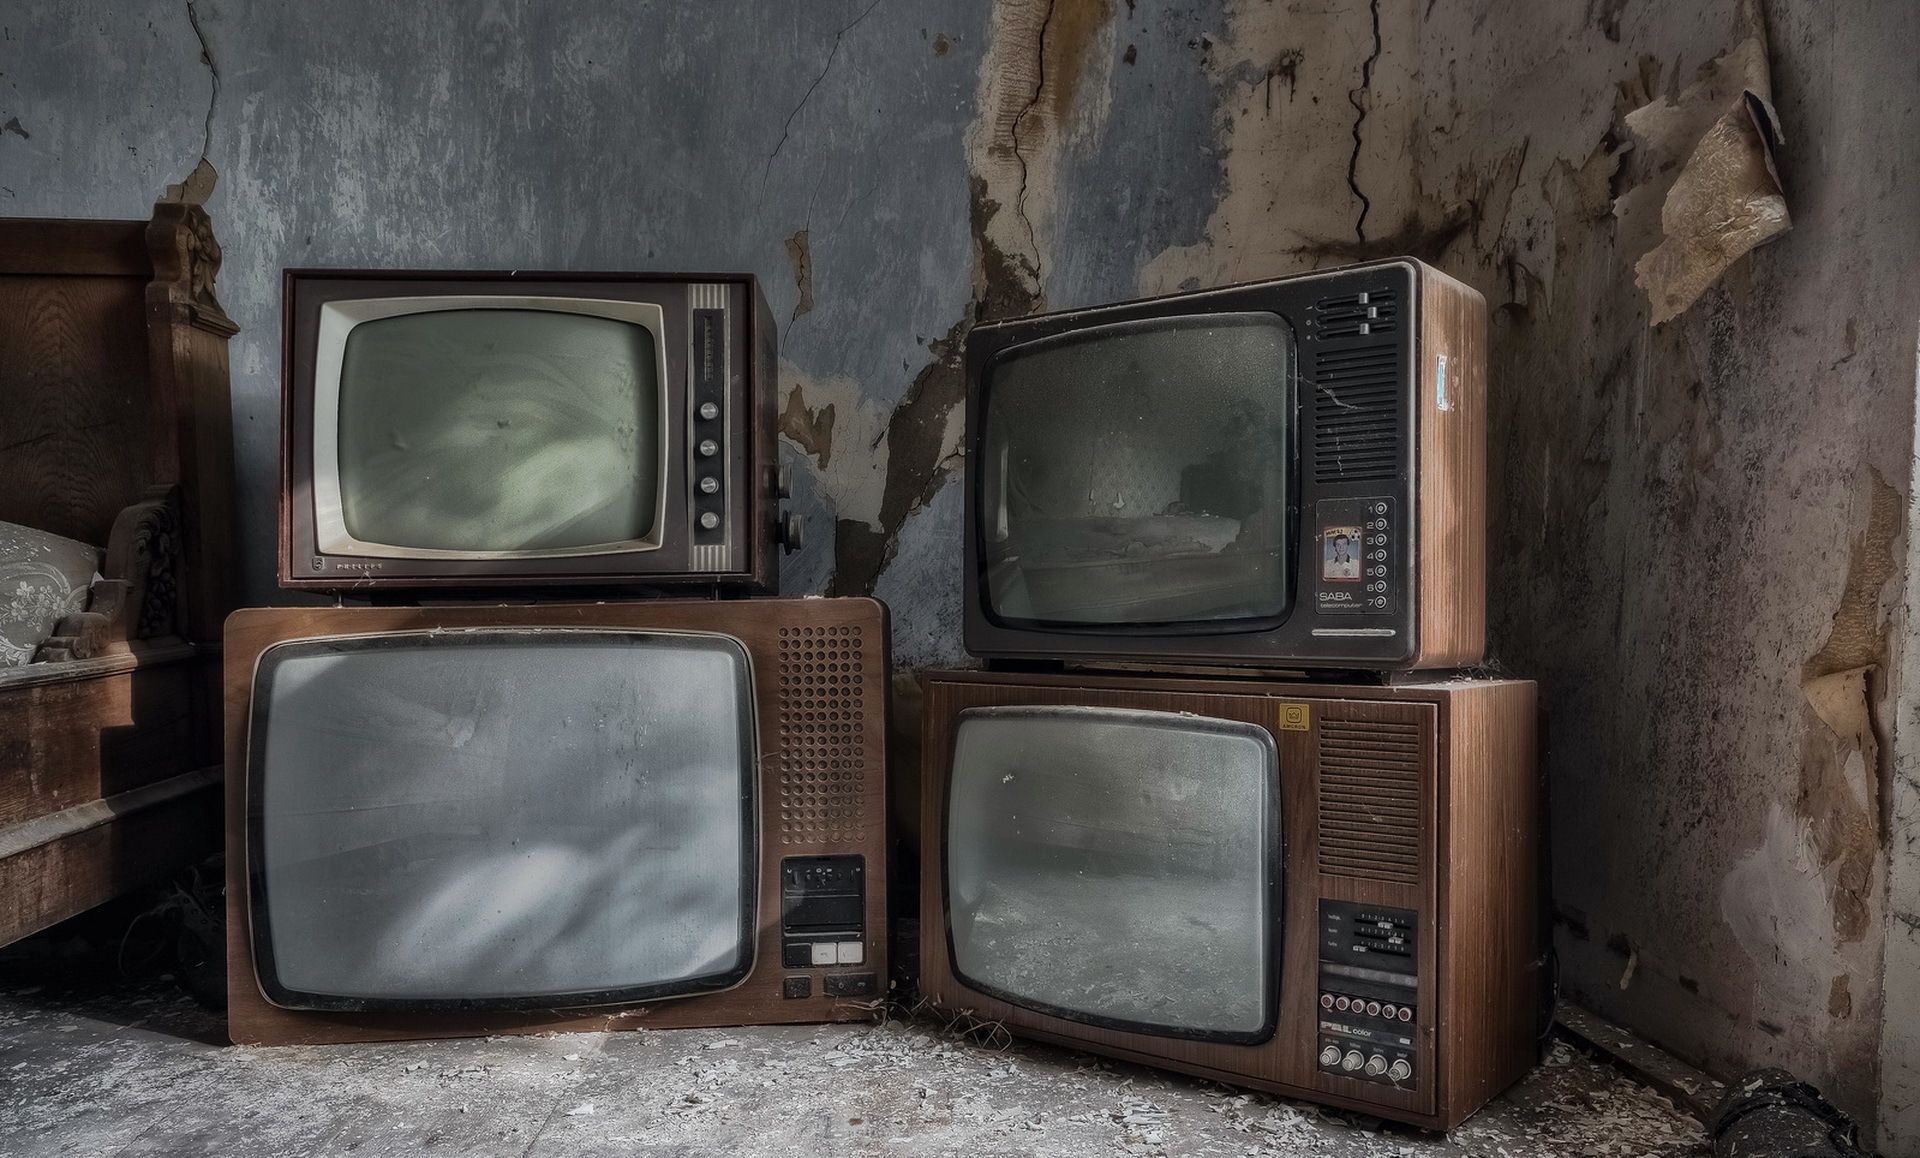 Куплю телевизор старый оскол. Старый телевизор. Старинный телевизор. Старые телевизоры СССР. Древний телевизор.